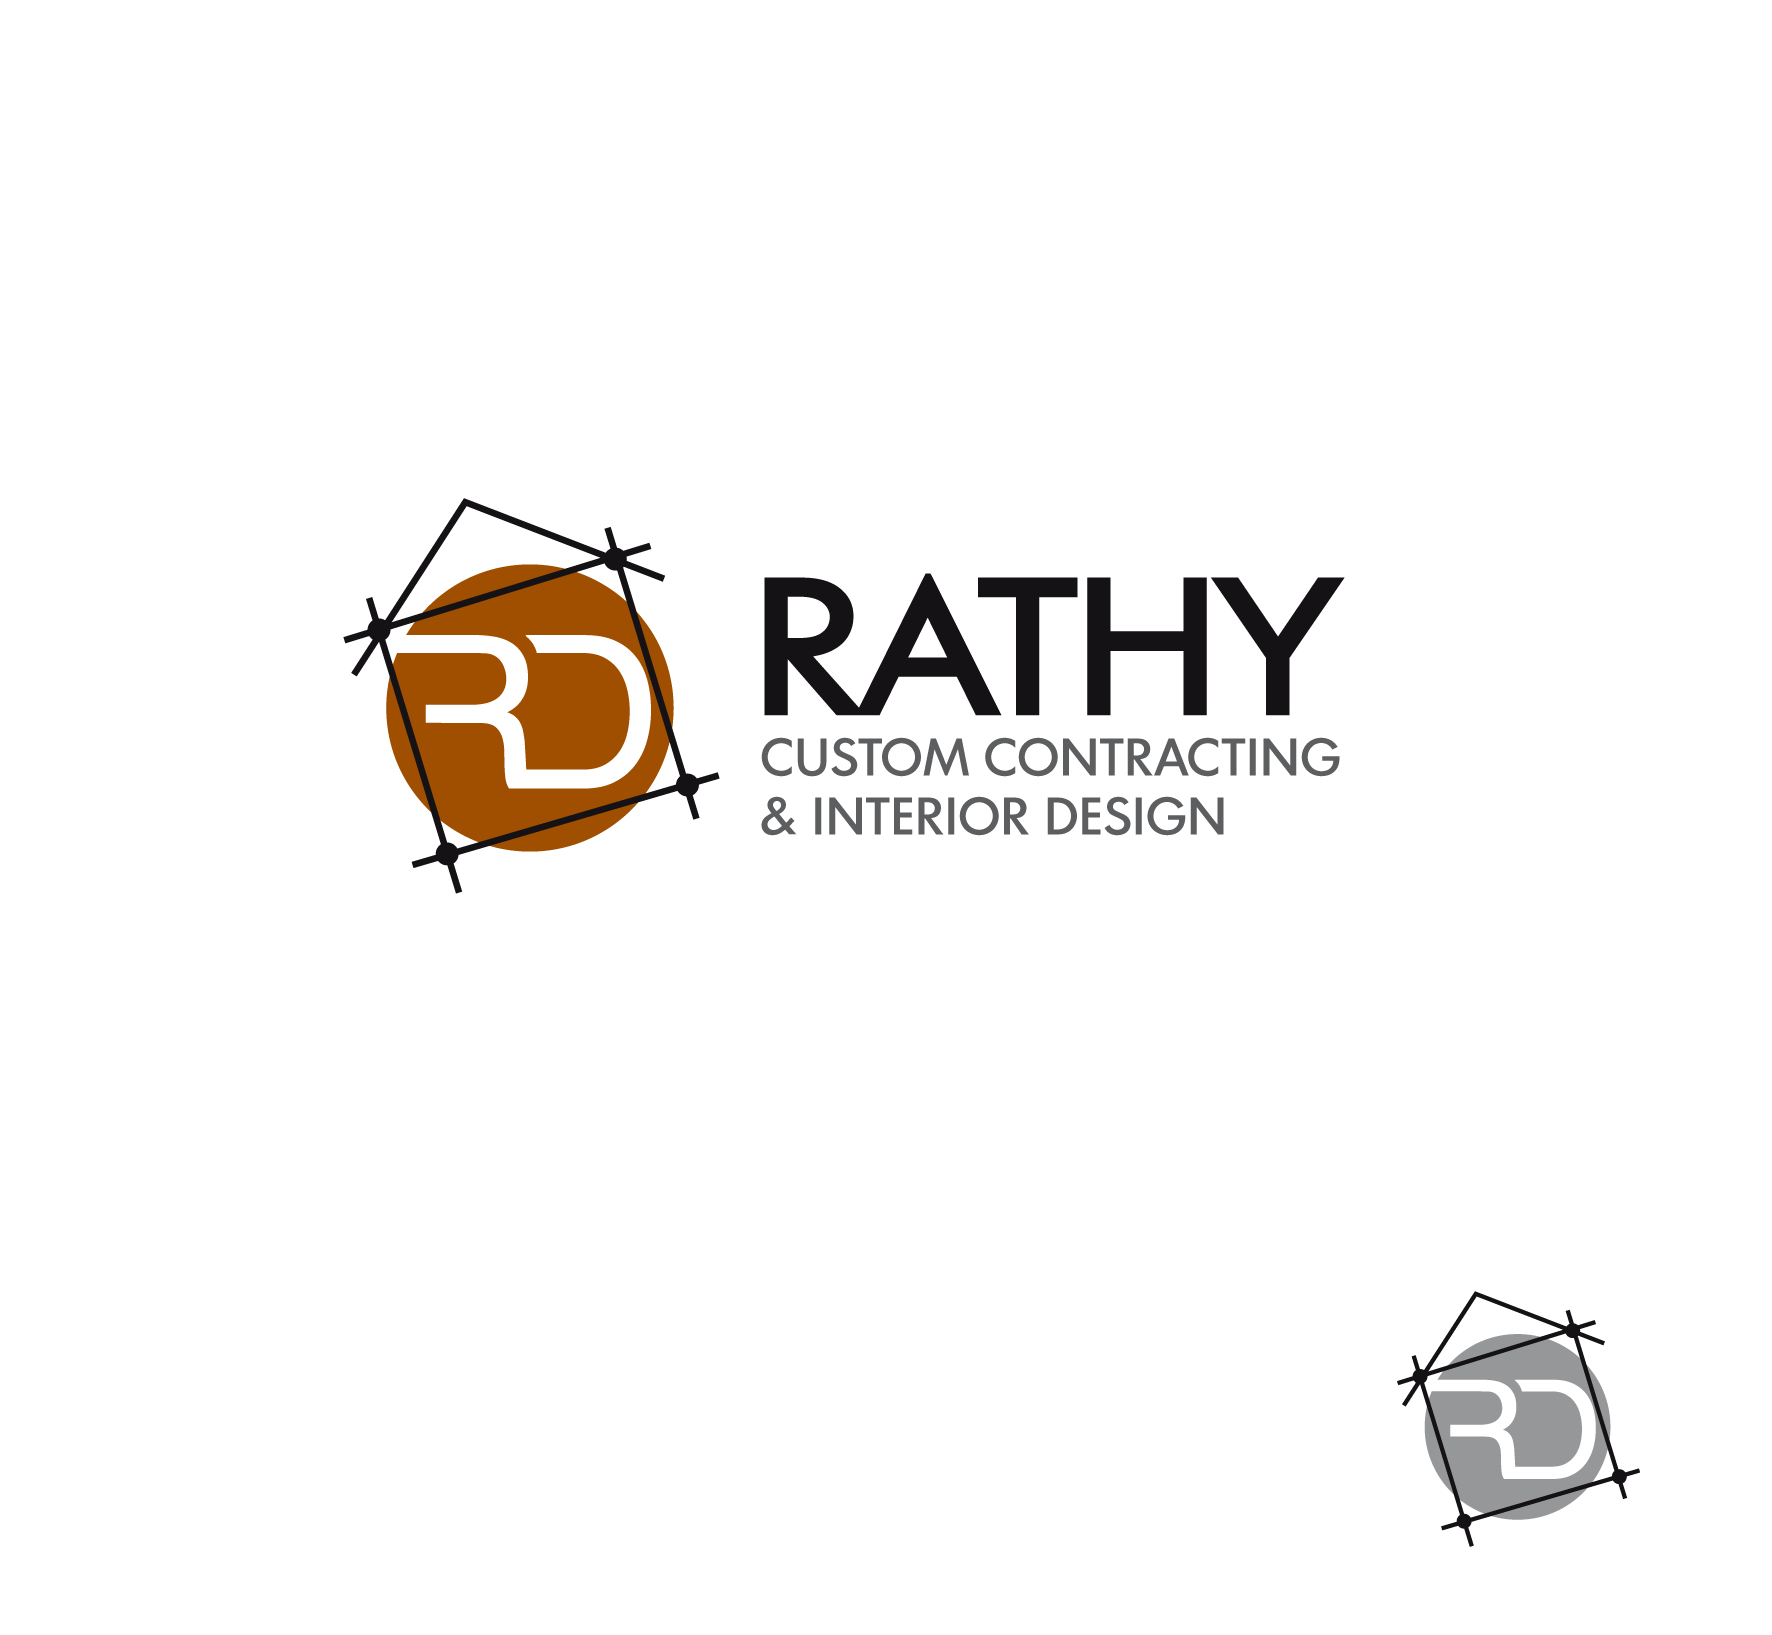 Decor Company Logo - Logo Design Needed for Exciting New Company Rathy Custom Contracting